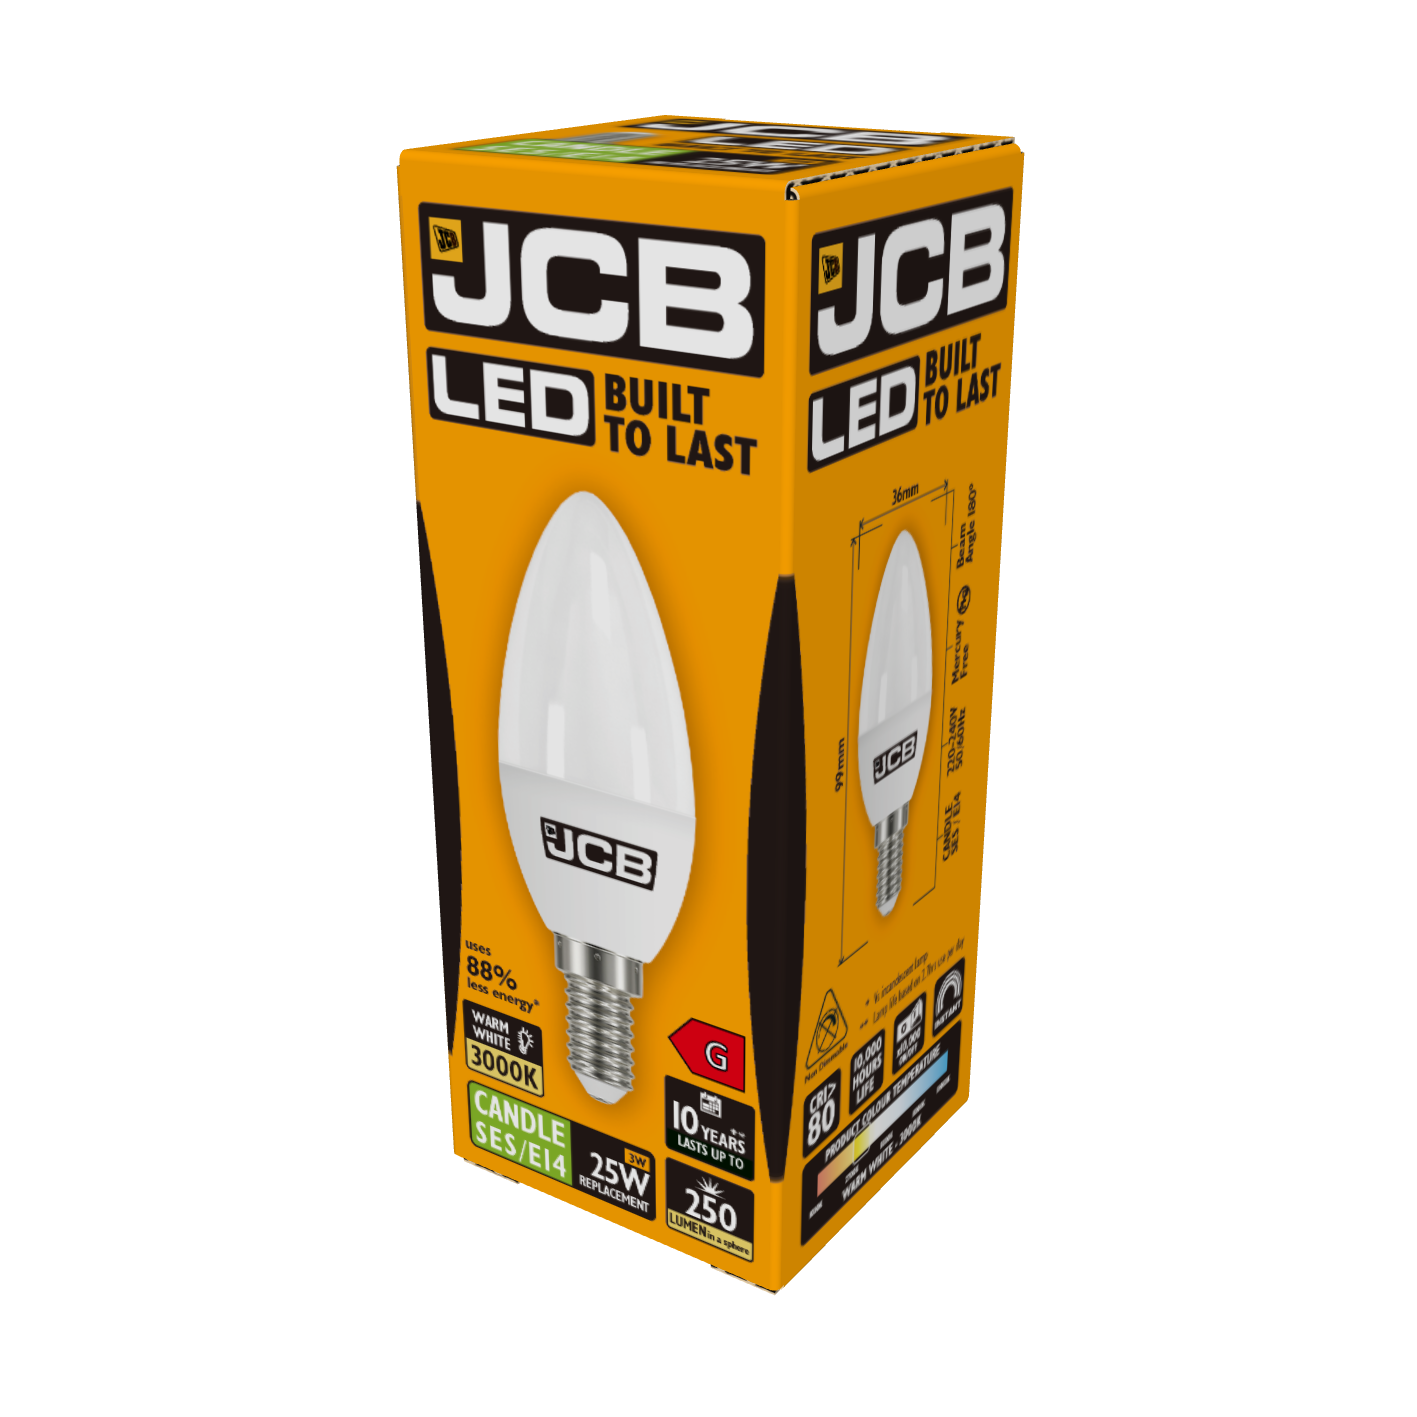 JCB LED Candle E14 (SES) 250lm 3W 3,000K (Warm White), Box of 1